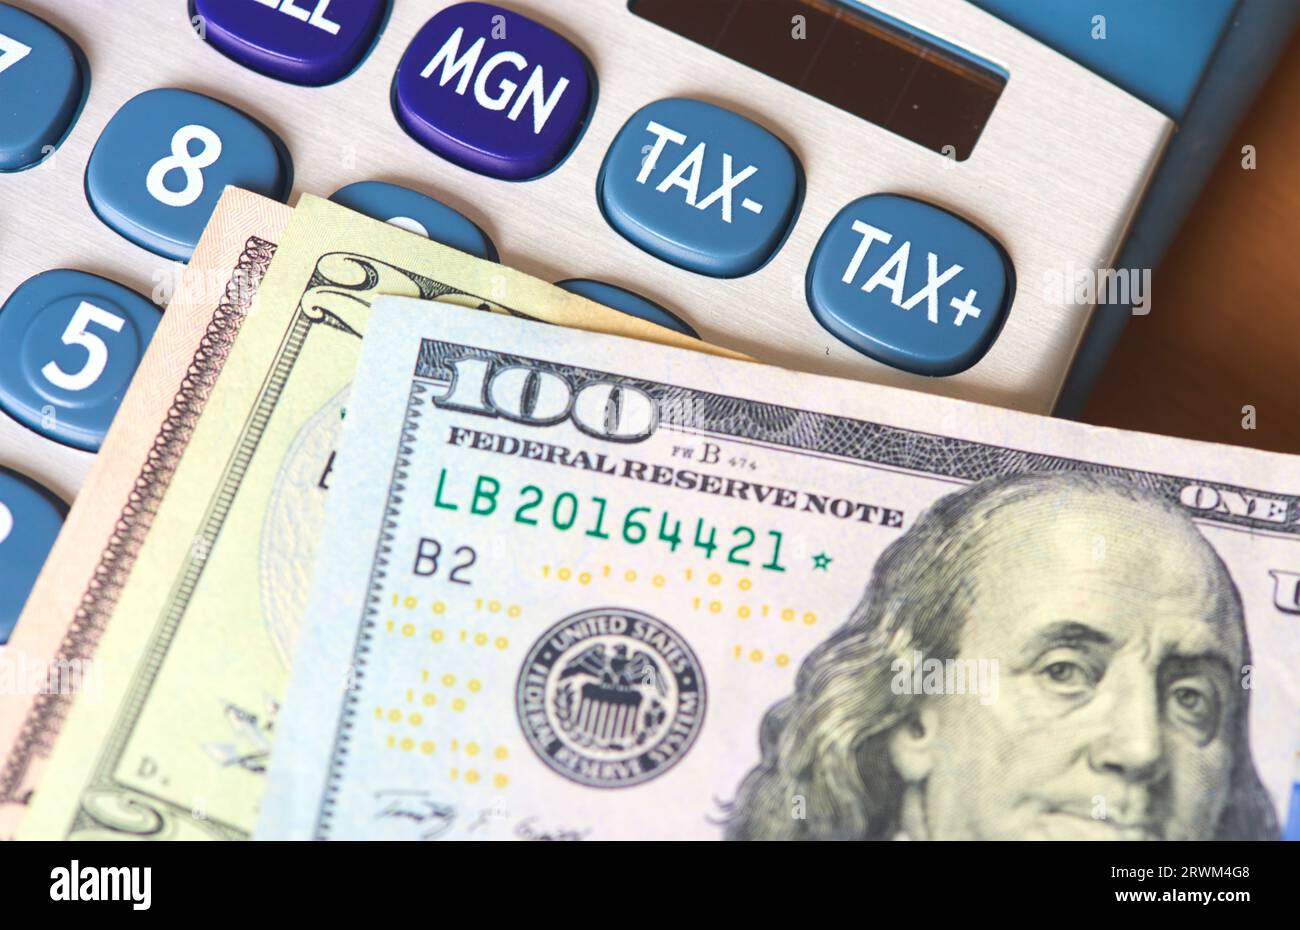 USA IRS Tax Stock Photo